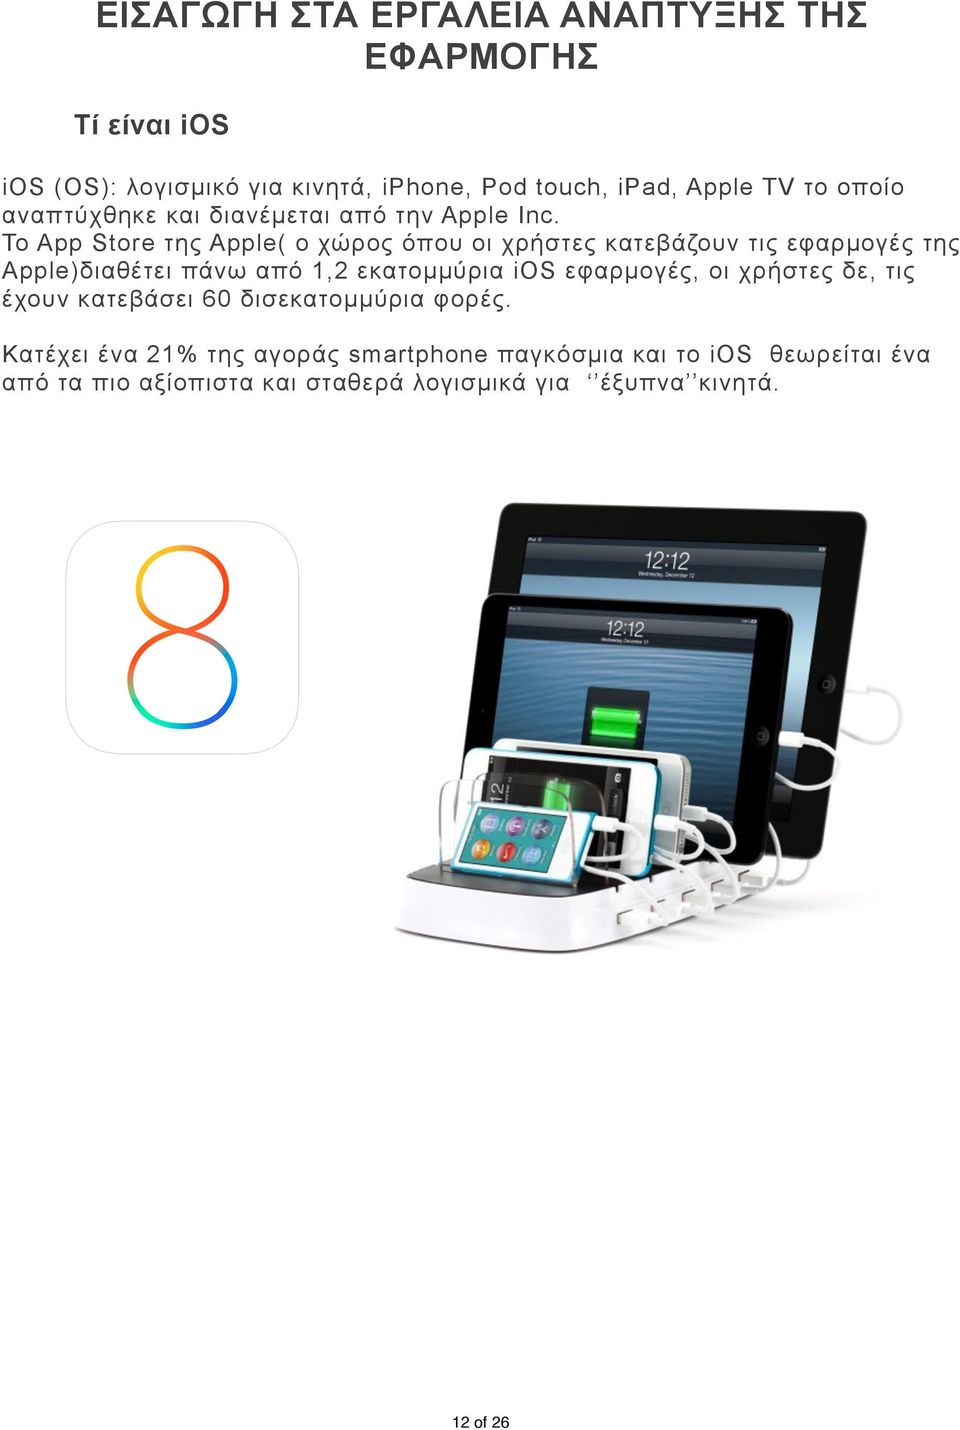 To App Store της Apple( ο χώρος όπου οι χρήστες κατεβάζουν τις εφαρµογές της Αpple)διαθέτει πάνω από 1,2 εκατοµµύρια ios